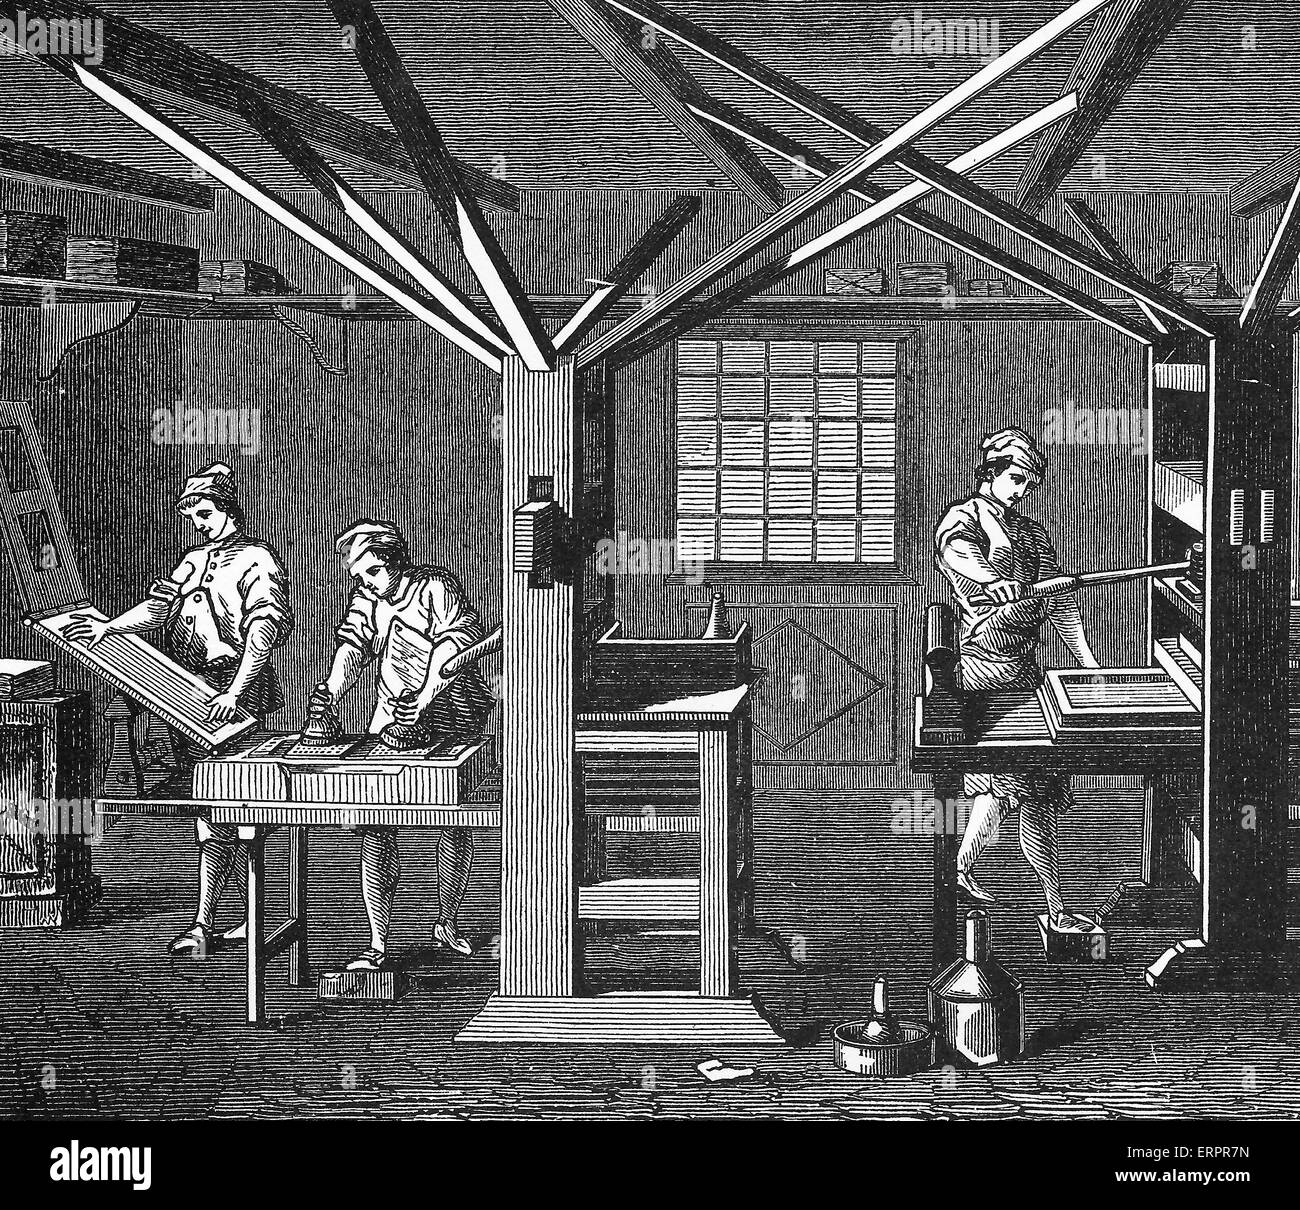 Printing house, historic illustration. Stock Photo